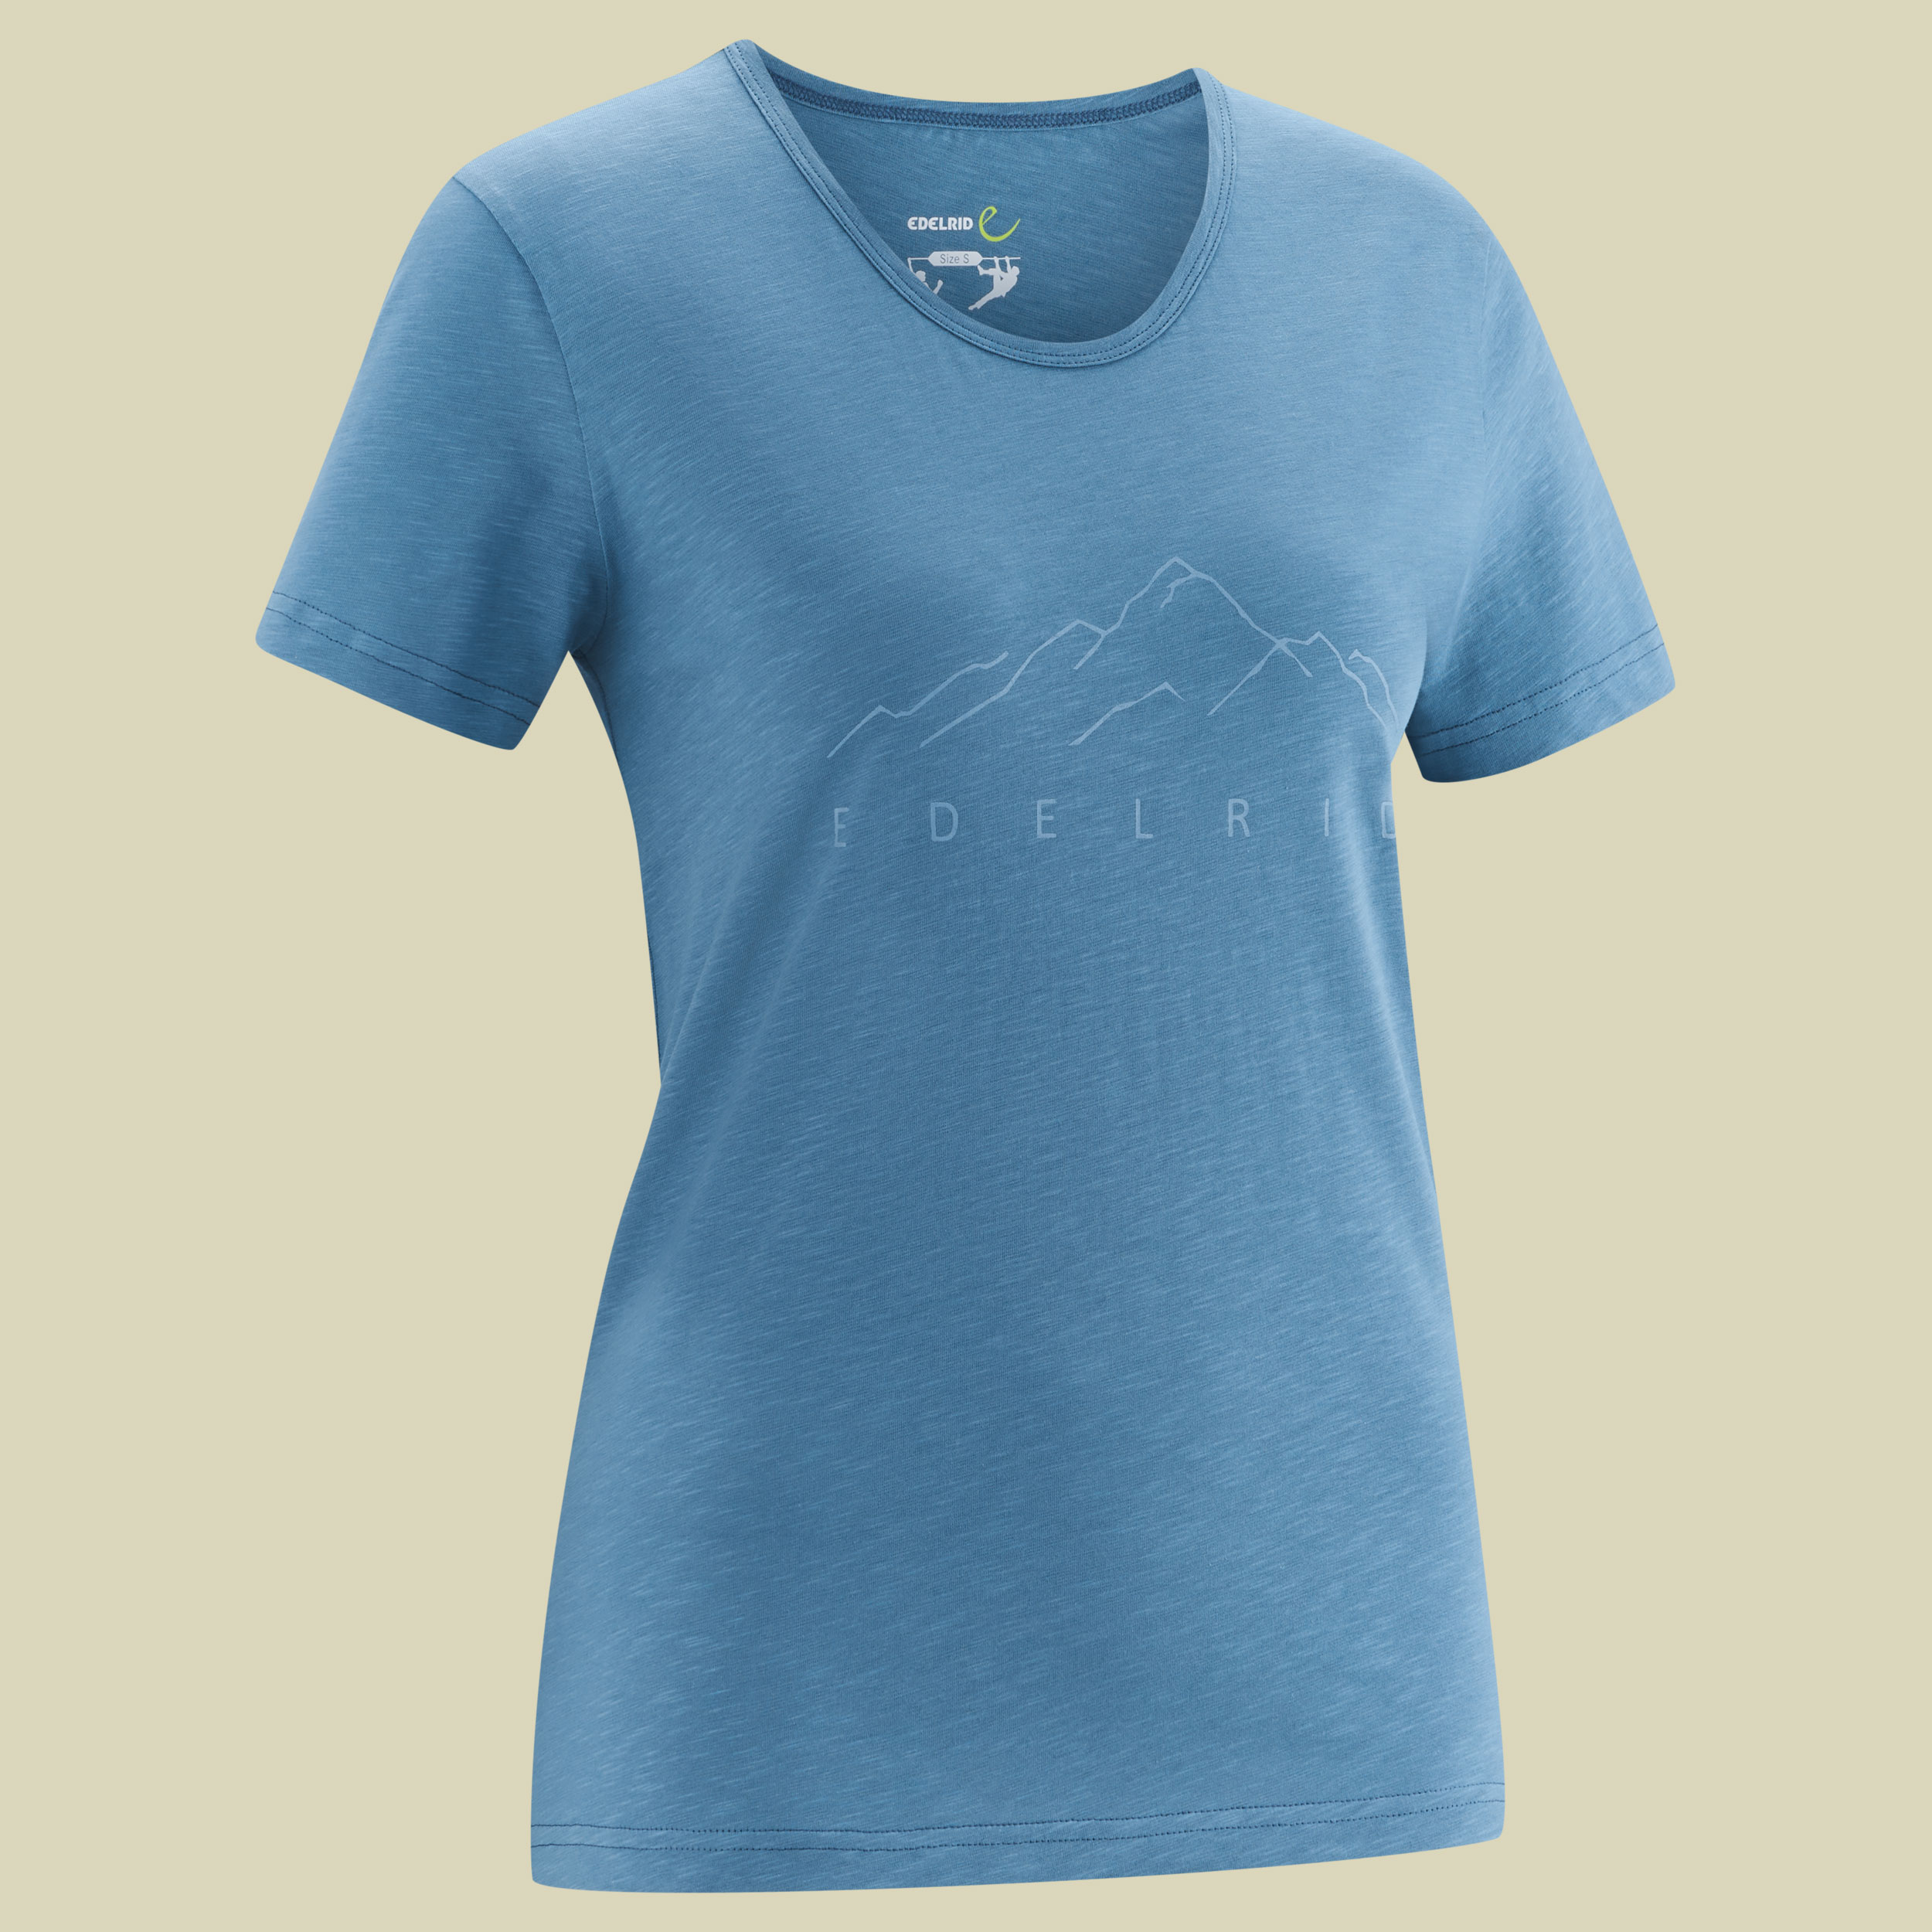 Highball T-Shirt V Women S blau - bluegrey